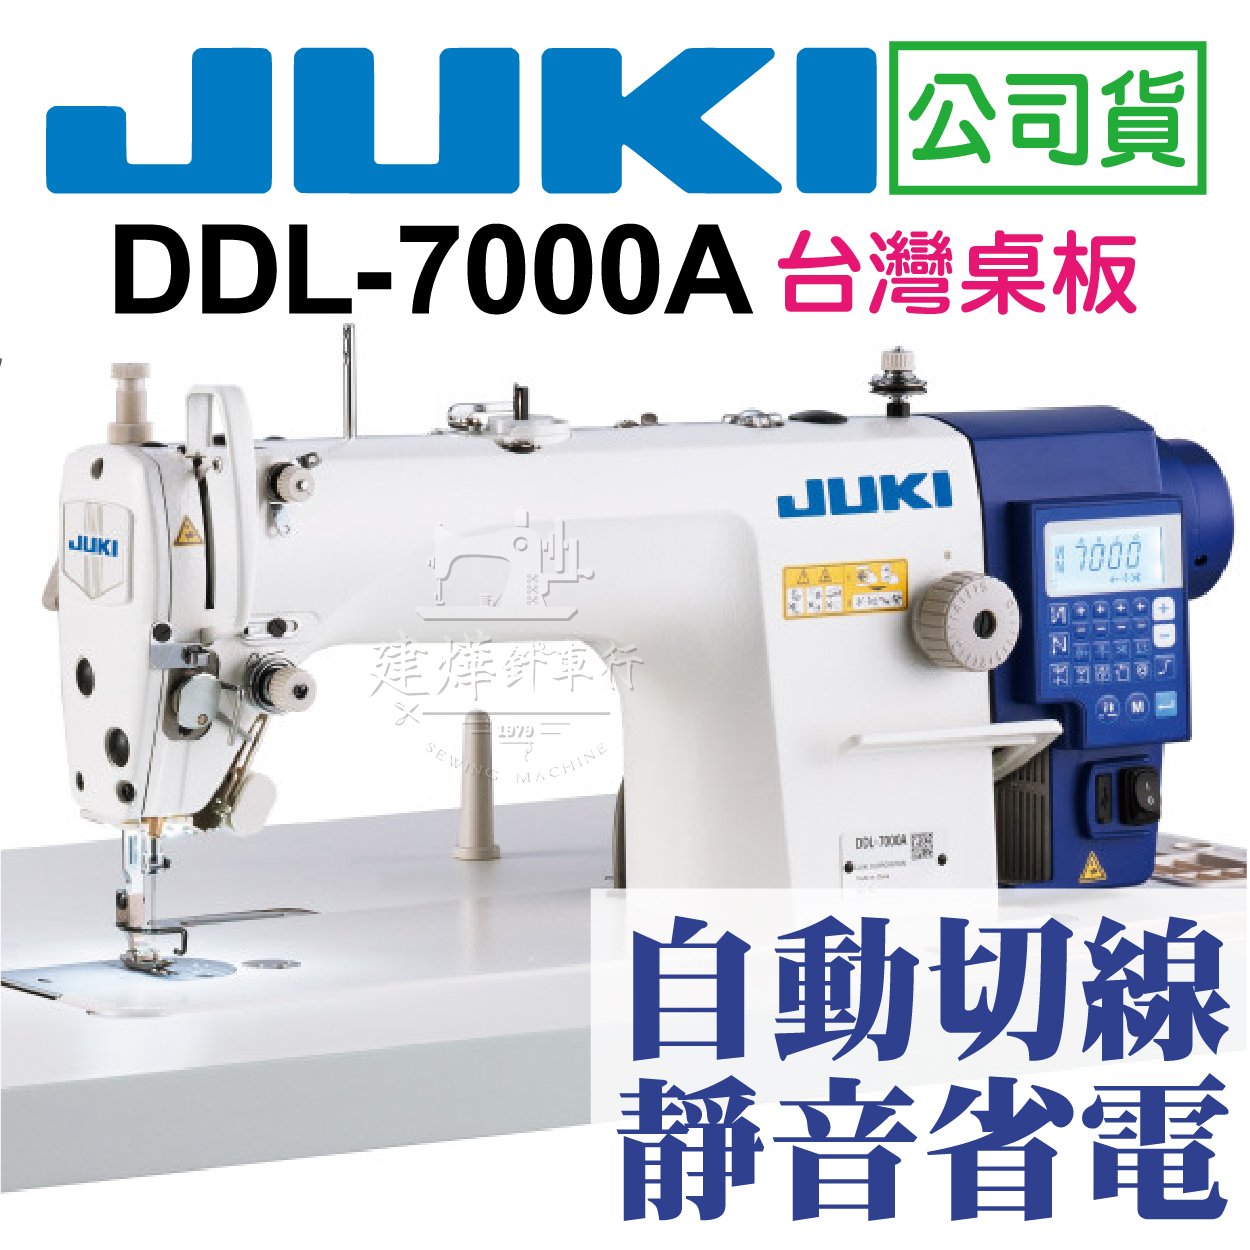 JUKI 工業用縫紉機DDL-7000A 台灣高級桌板自動切線省電靜音馬達* 建燁 